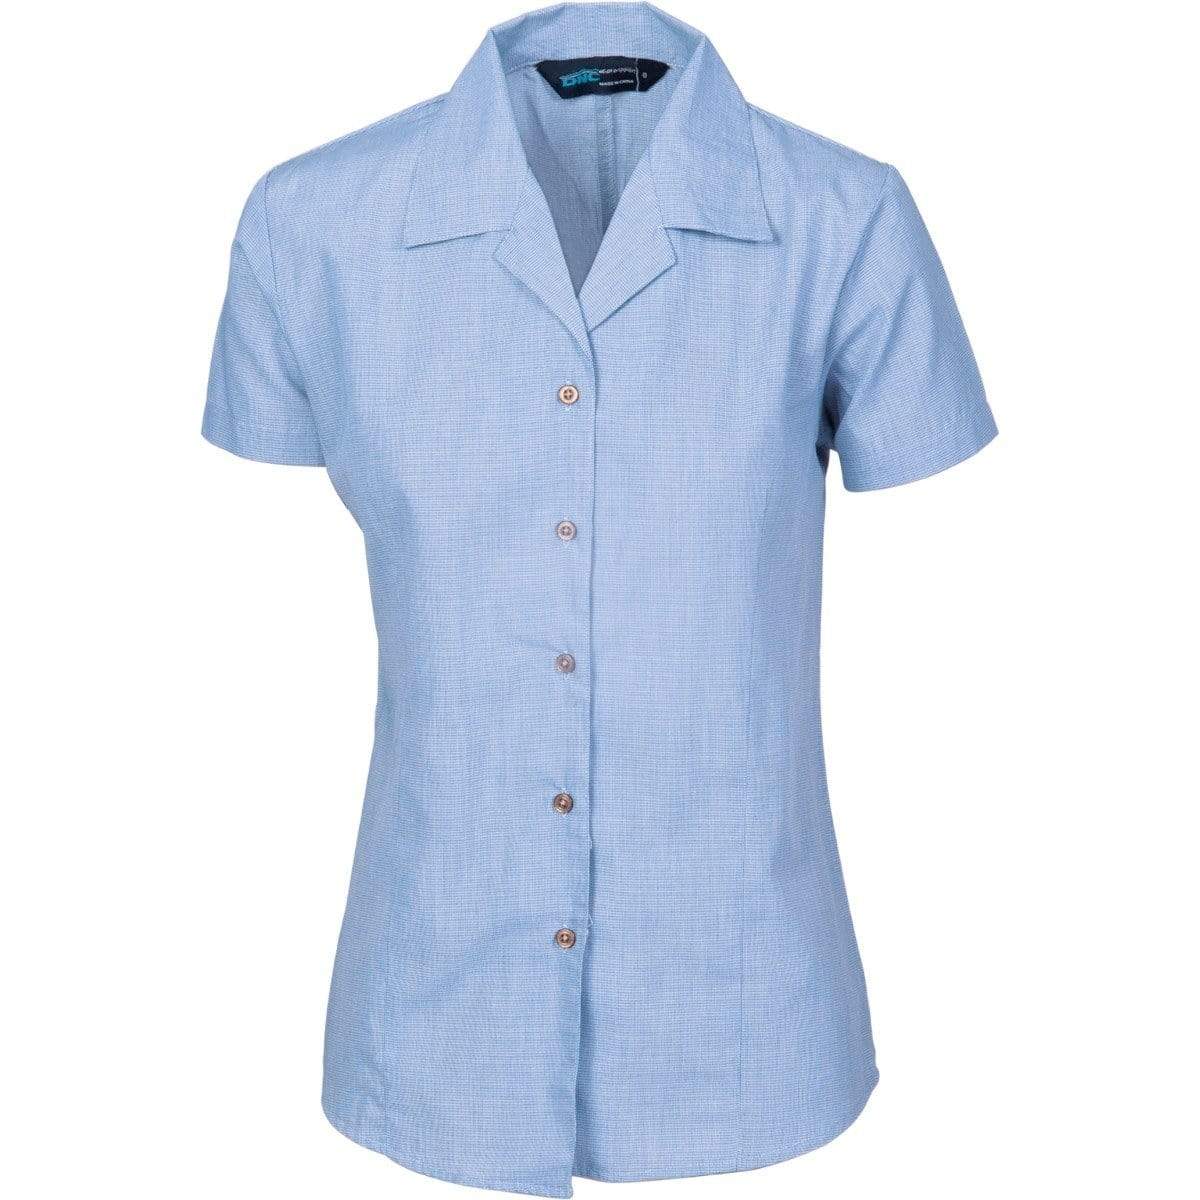 Dnc Workwear Ladies Revere Collar Mini (Check) Houndstooth Short Sleeve Business Shirt - 4255 Corporate Wear DNC Workwear Blue 6 